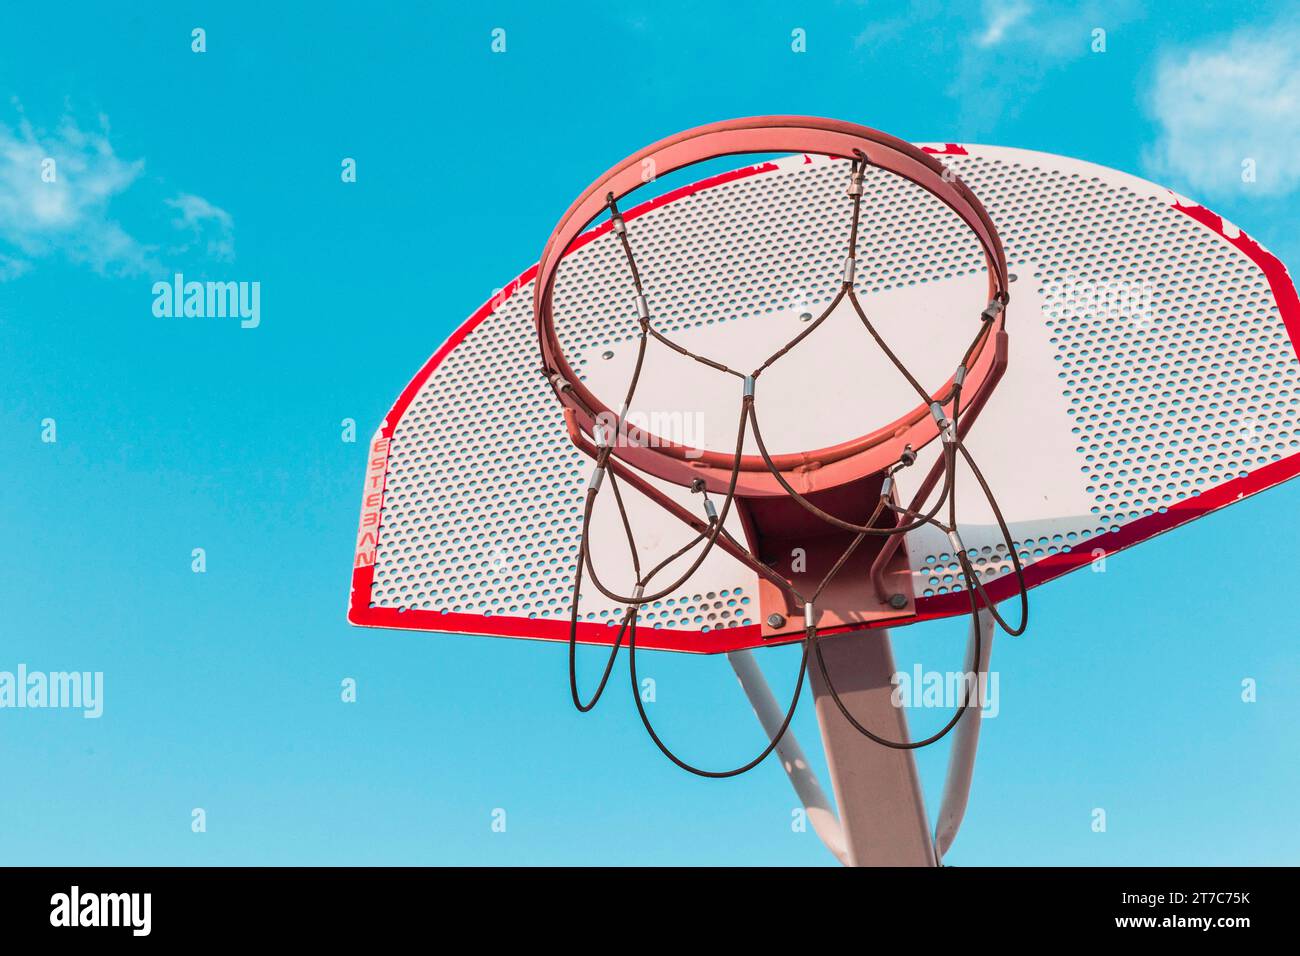 Low angle view basketball hoop Stock Photo